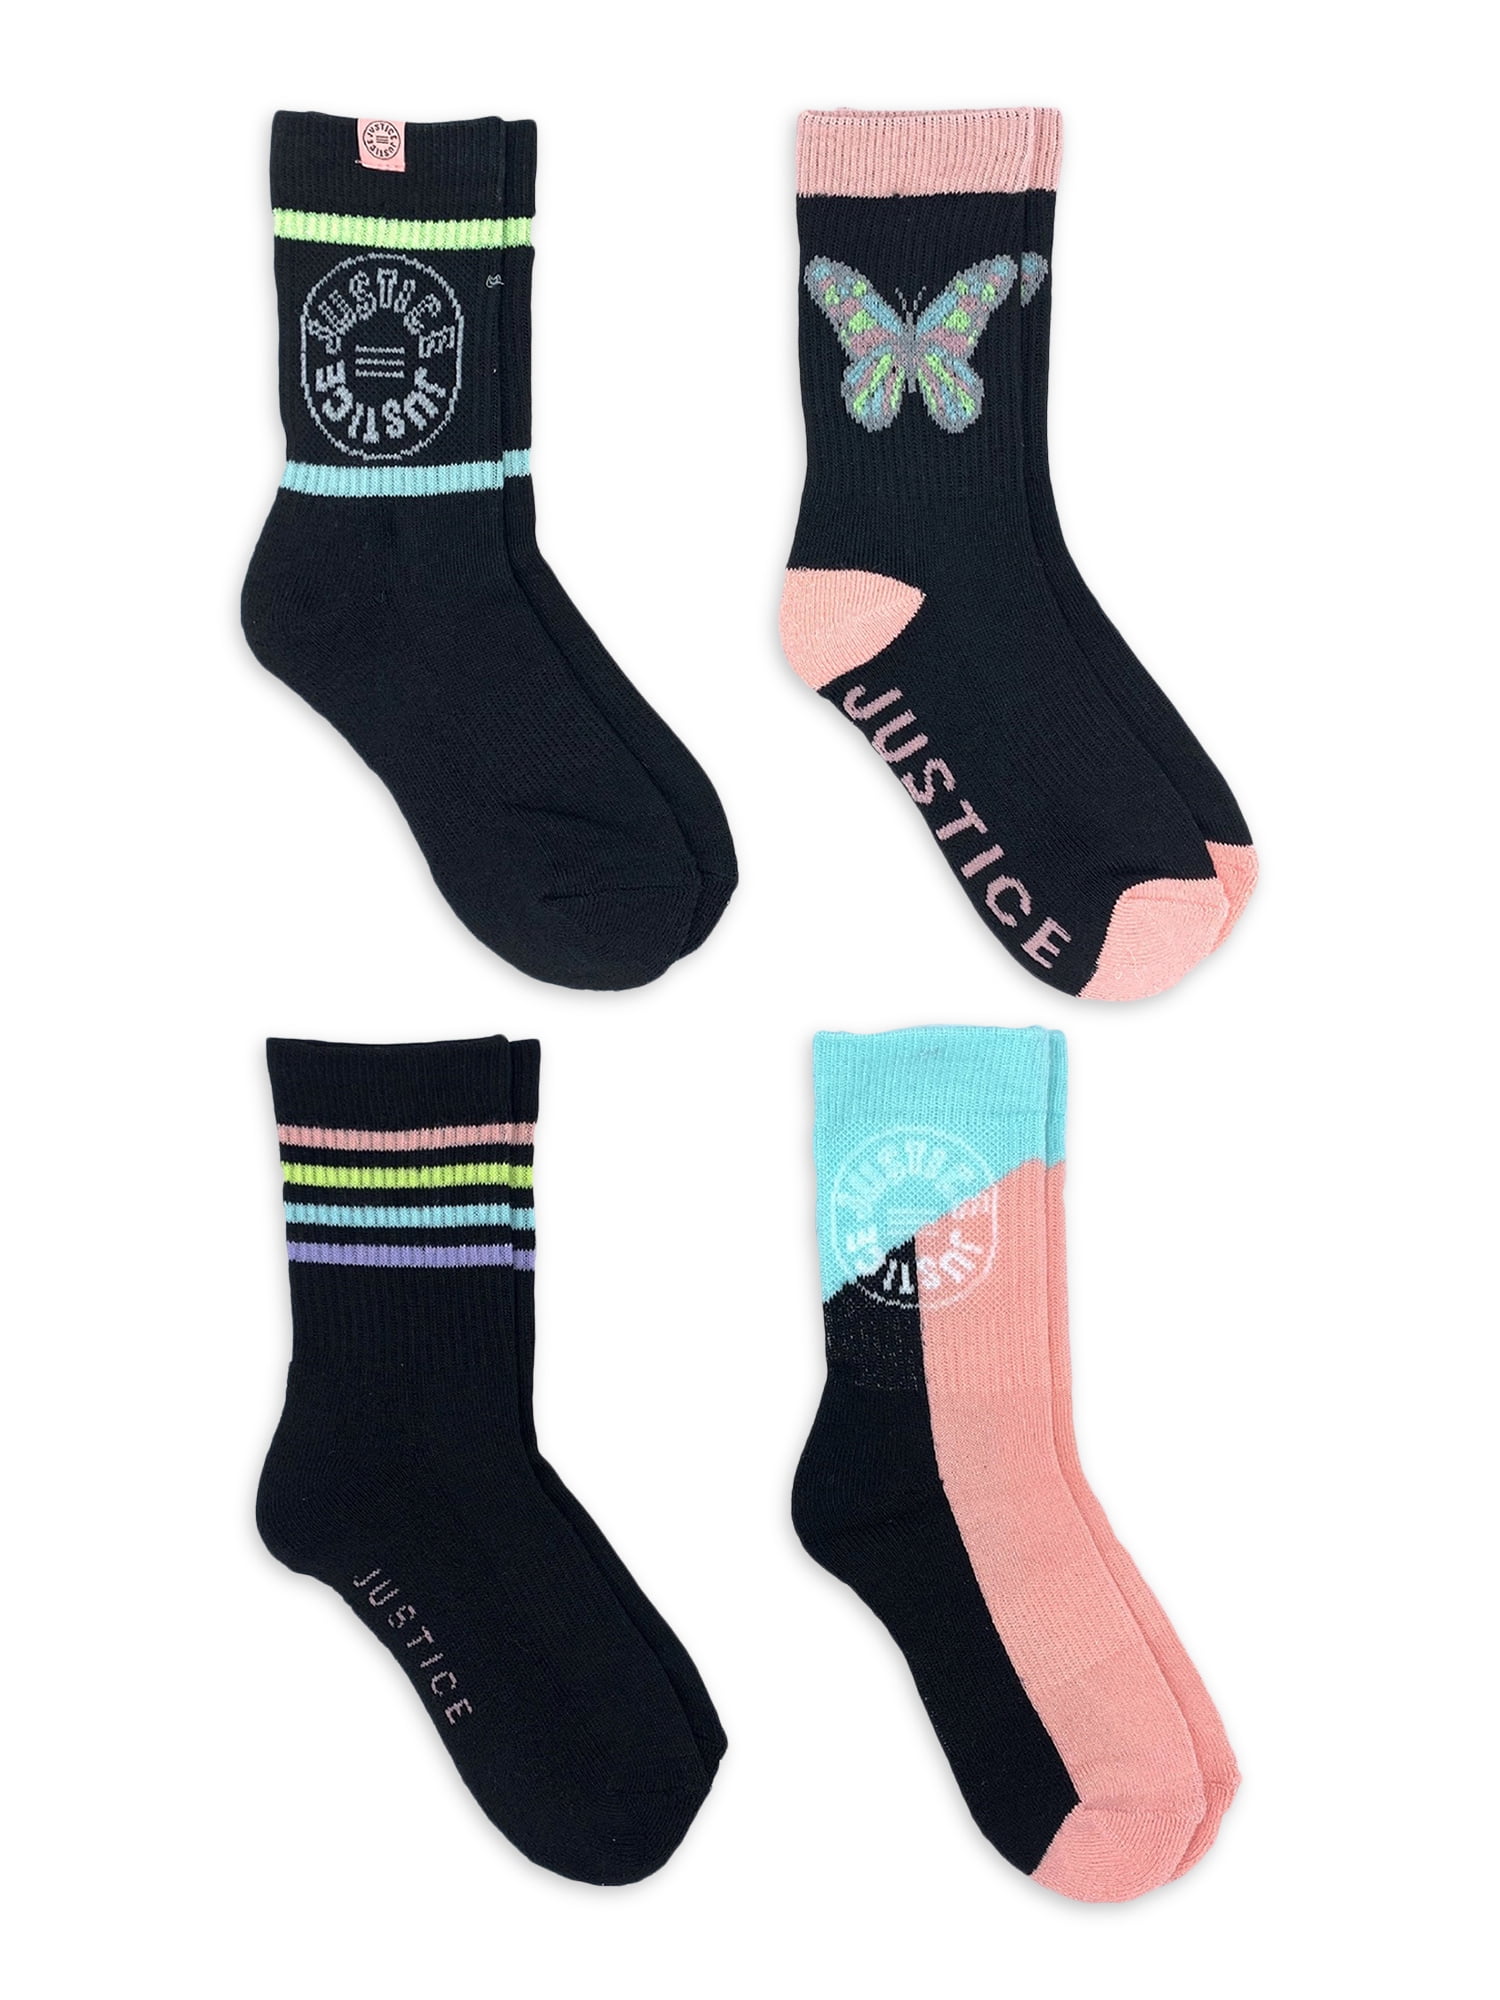 Justice Girls Crew Socks, 4-Pack, Sizes M-L